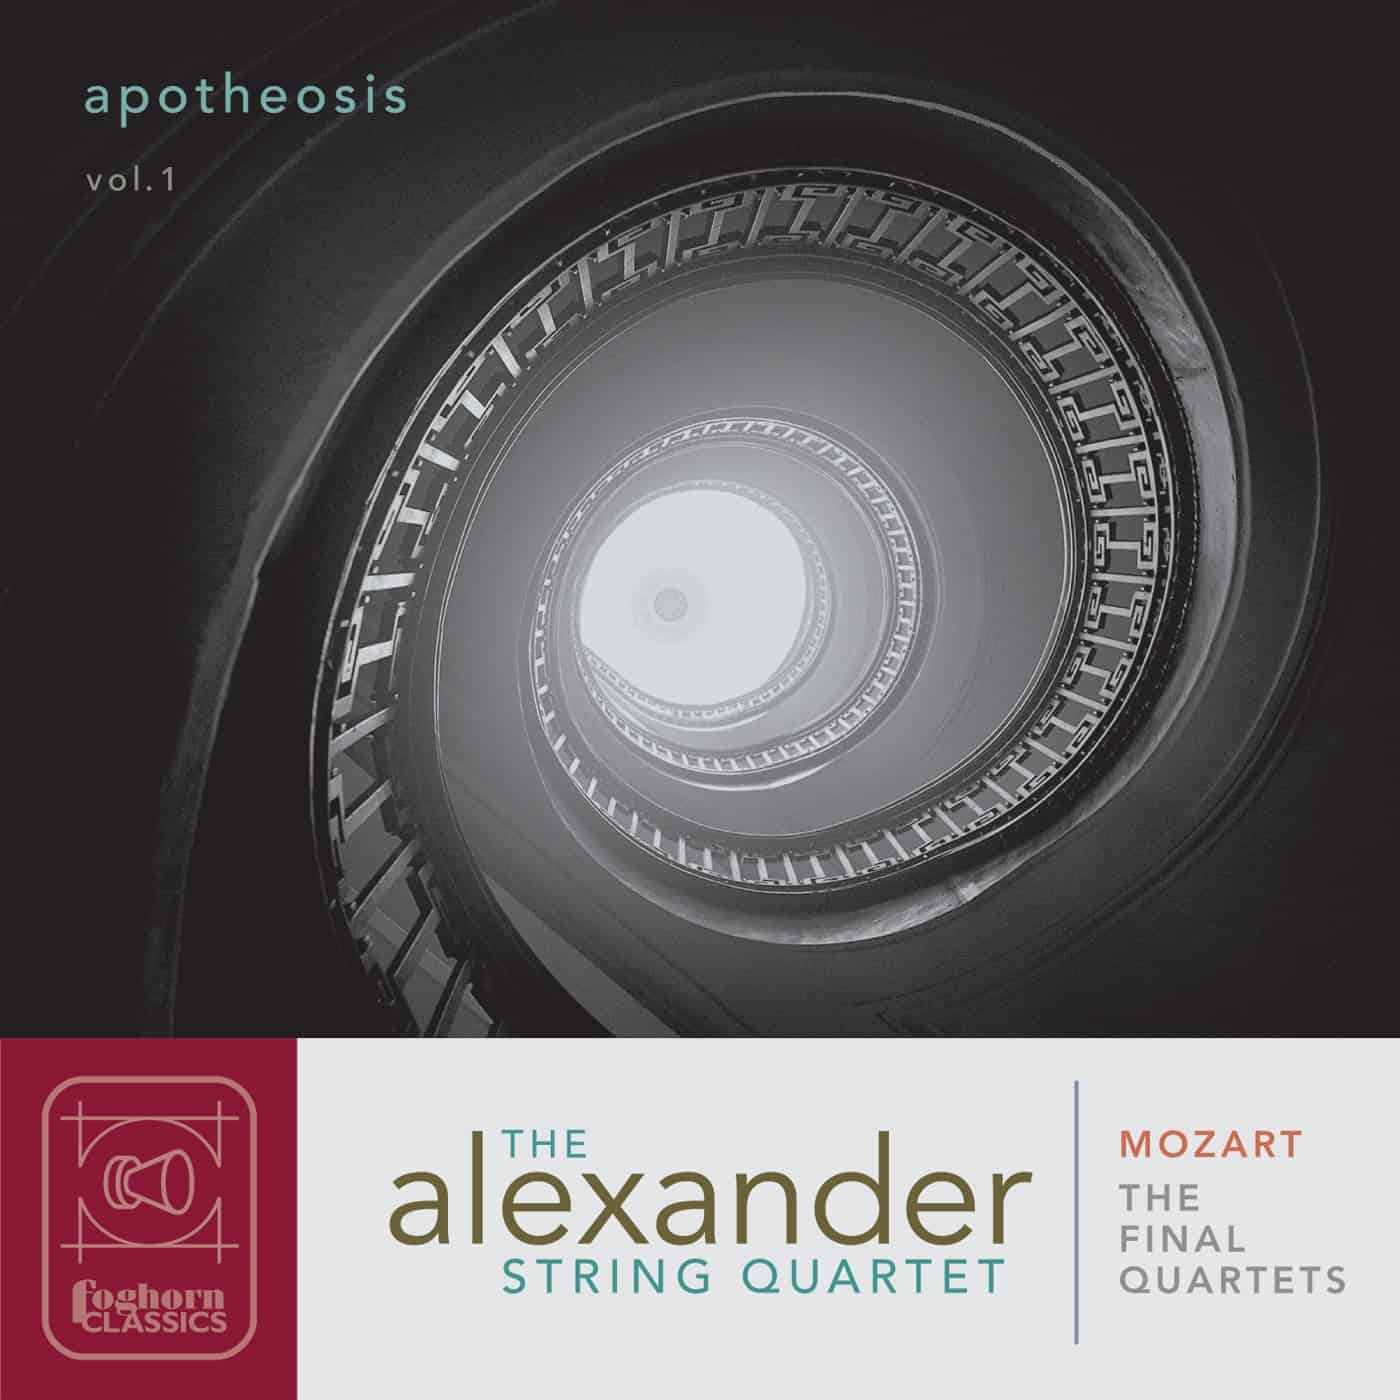 Mozart Apotheosis, Vol. 1 Now Available